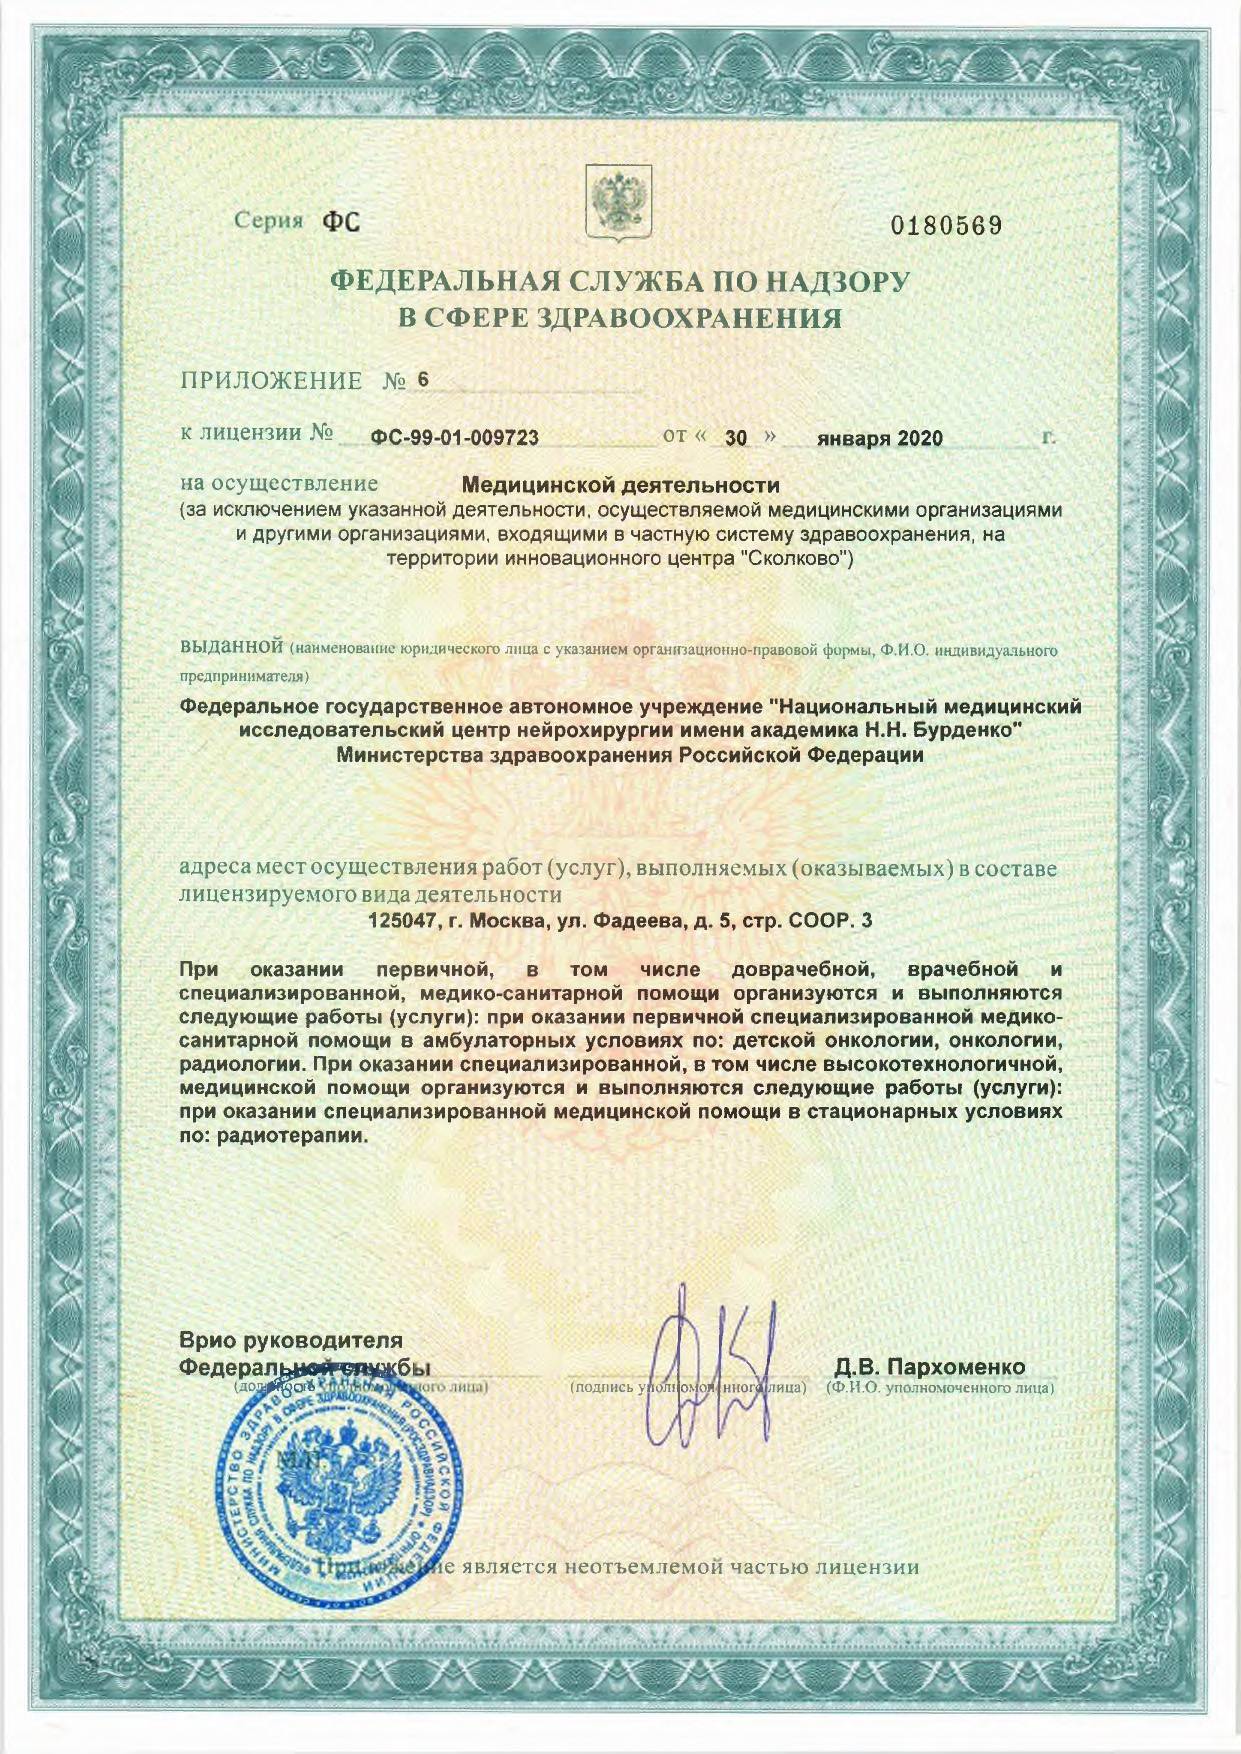 Институт нейрохирургии имени академика Н. Н. Бурденко лицензия №10